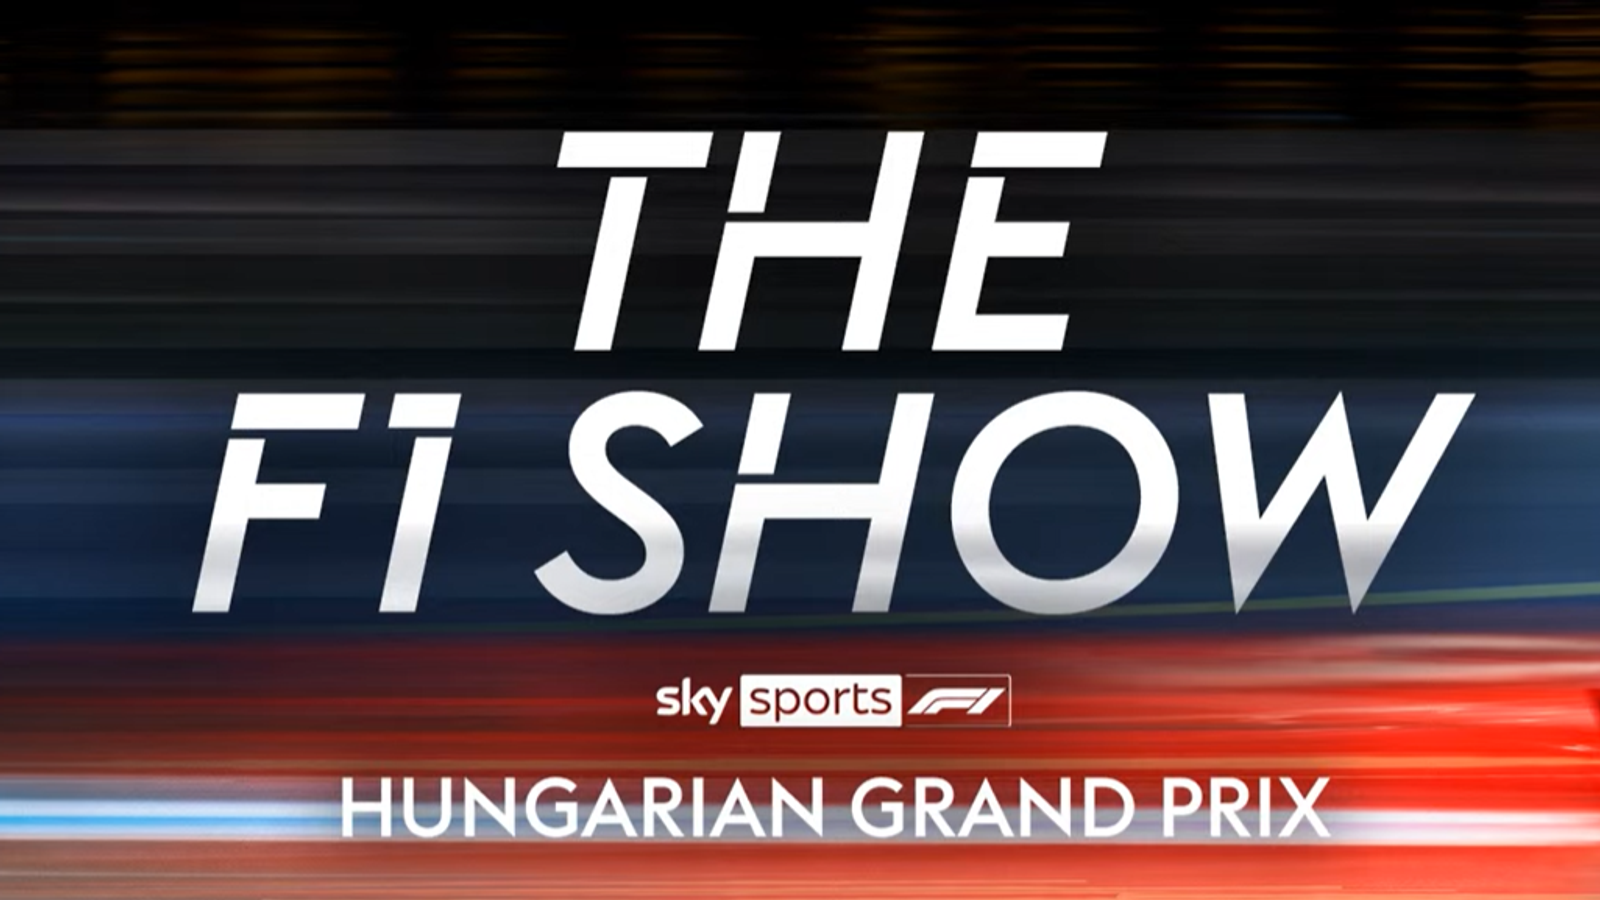 Sky Sports F1 Show Czech Republic, SAVE 38%